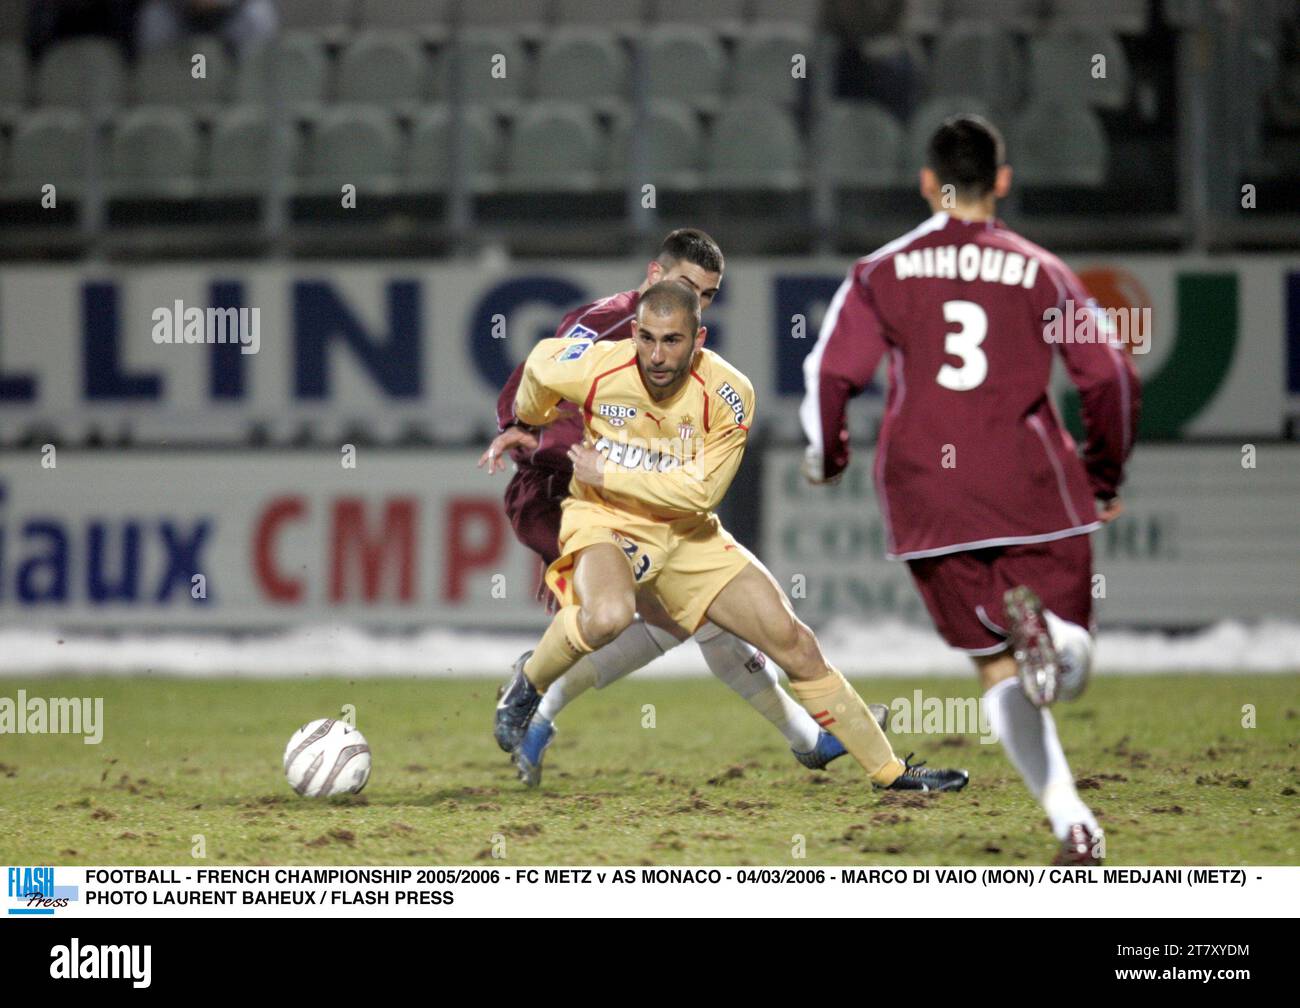 FOOTBALL - FRENCH CHAMPIONSHIP 2005/2006 - FC METZ v AS MONACO - 04/03/2006 - MARCO DI VAIO (MON) / CARL MEDJANI (METZ) - PHOTO LAURENT BAHEUX / FLASH PRESS Stock Photo